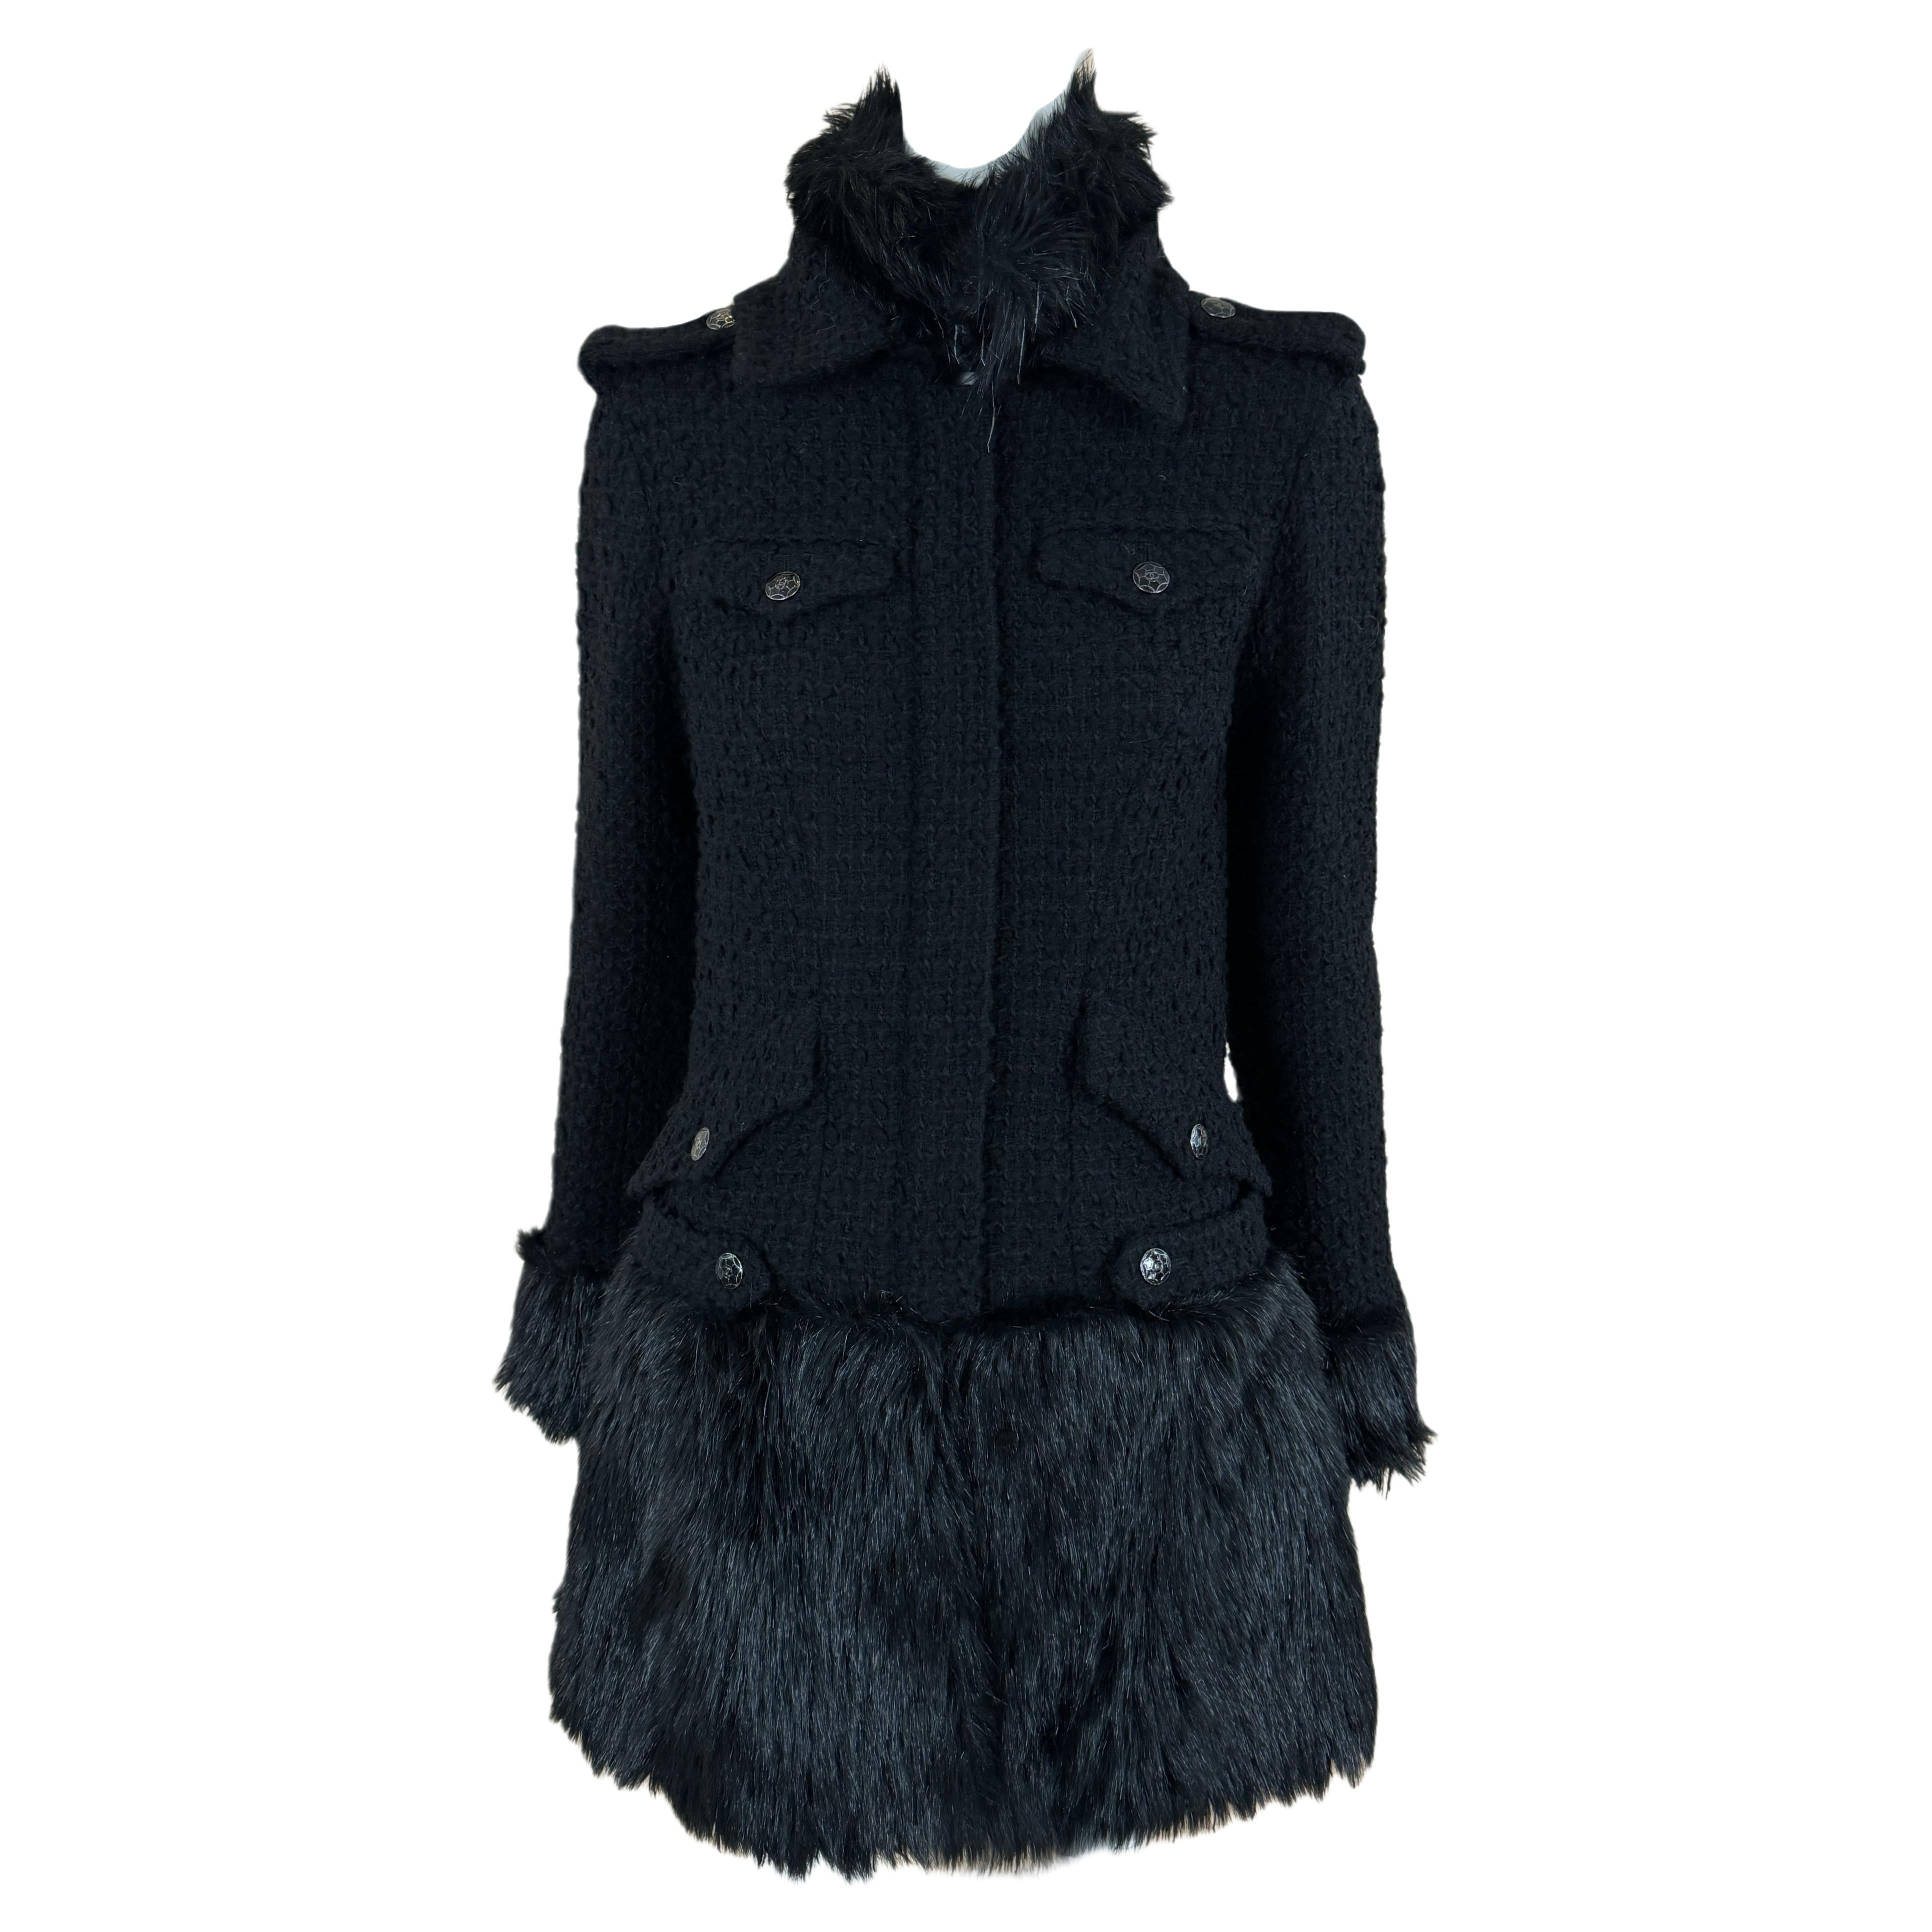 Chanel Jewel Embellishment Black Tweed Coat with Faux Fur Details